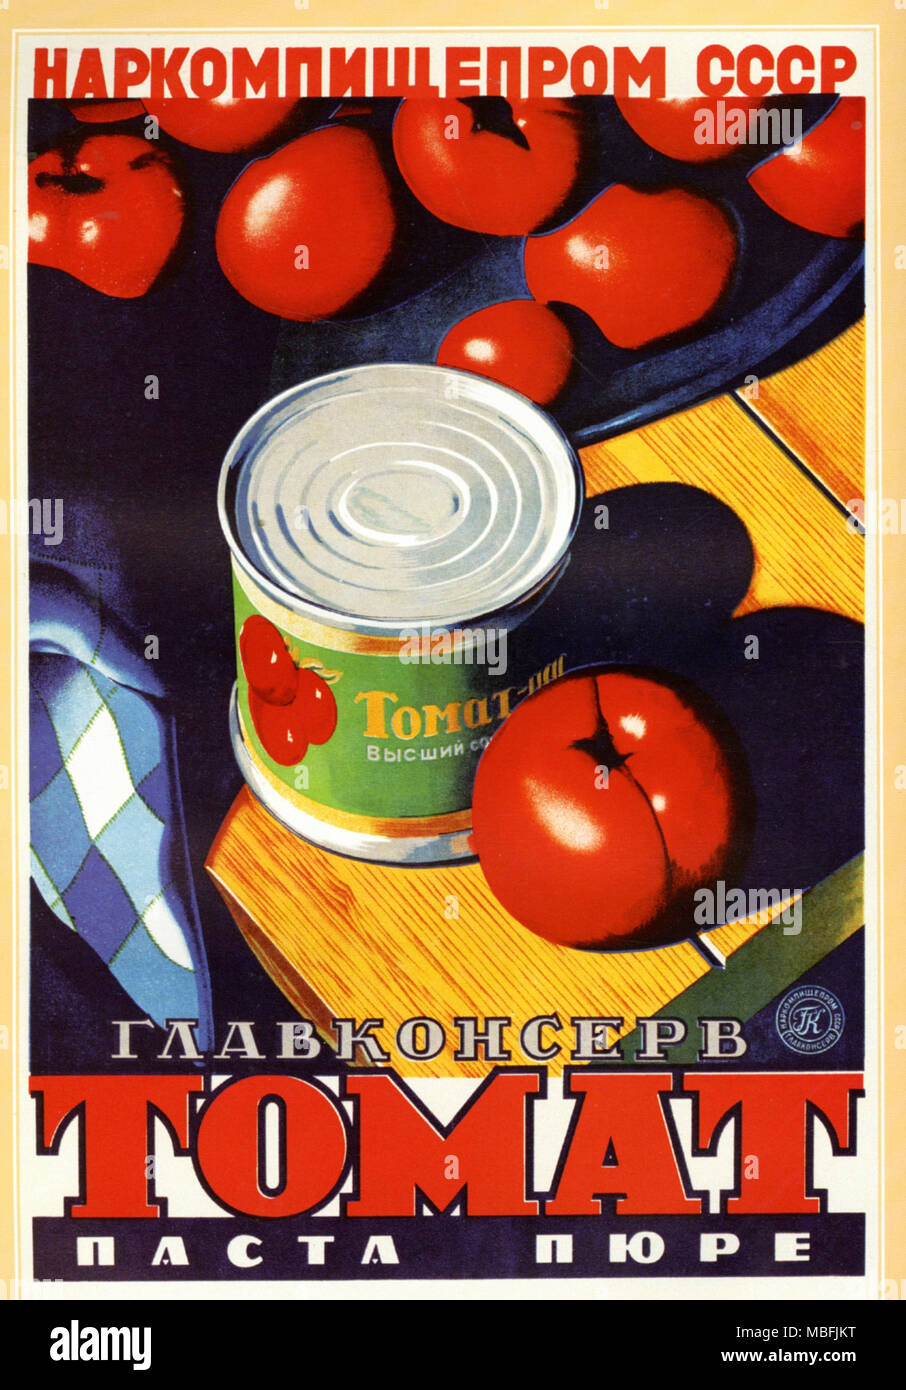 Tomatenmark Stockfoto